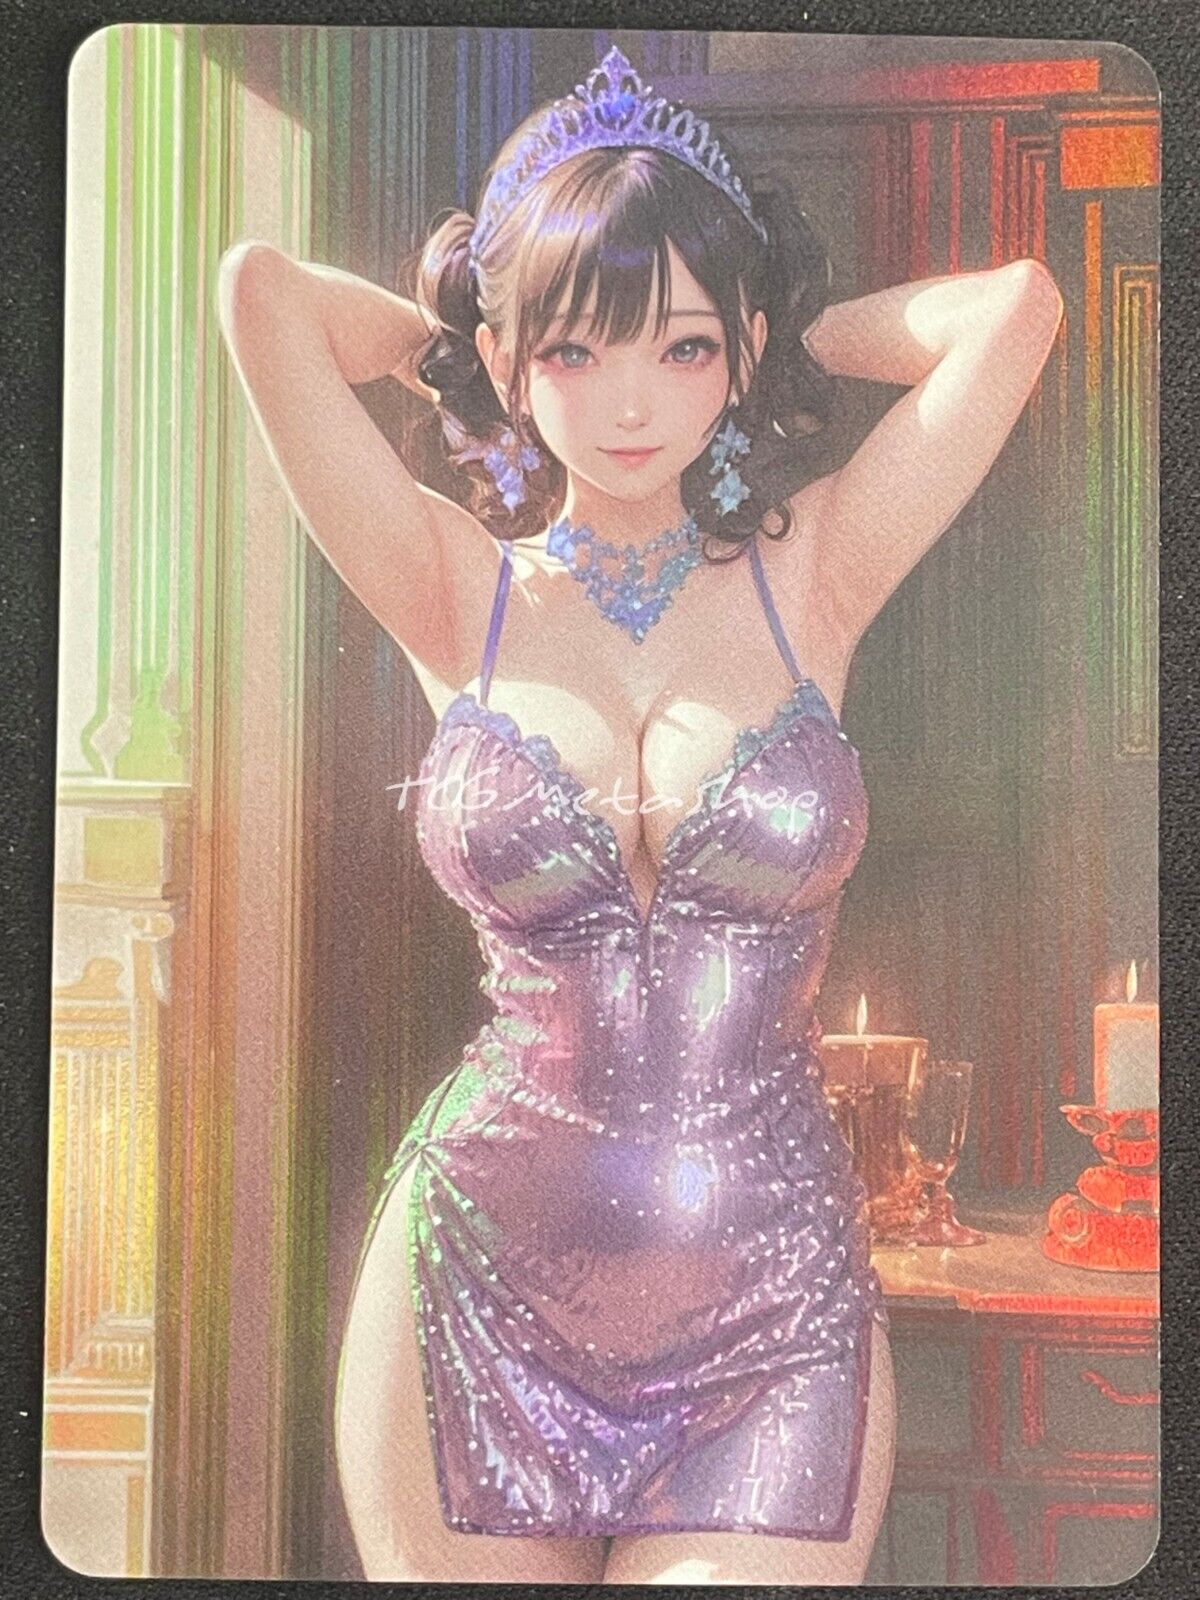 🔥 Cute Girl Goddess Story Anime Waifu Card ACG B 86 🔥